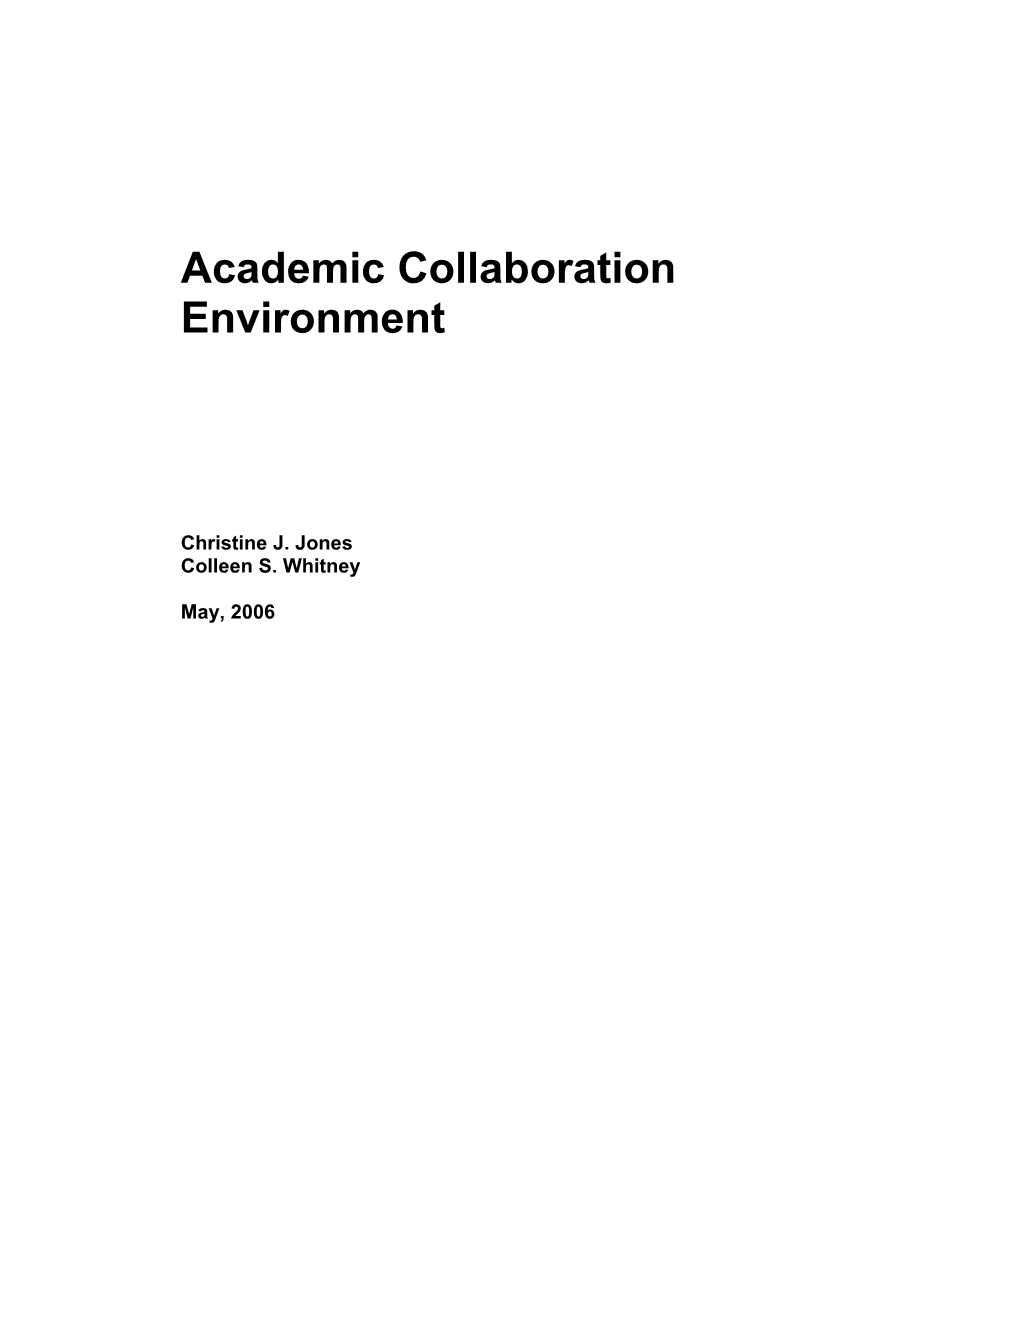 Academic Collaboration Environment